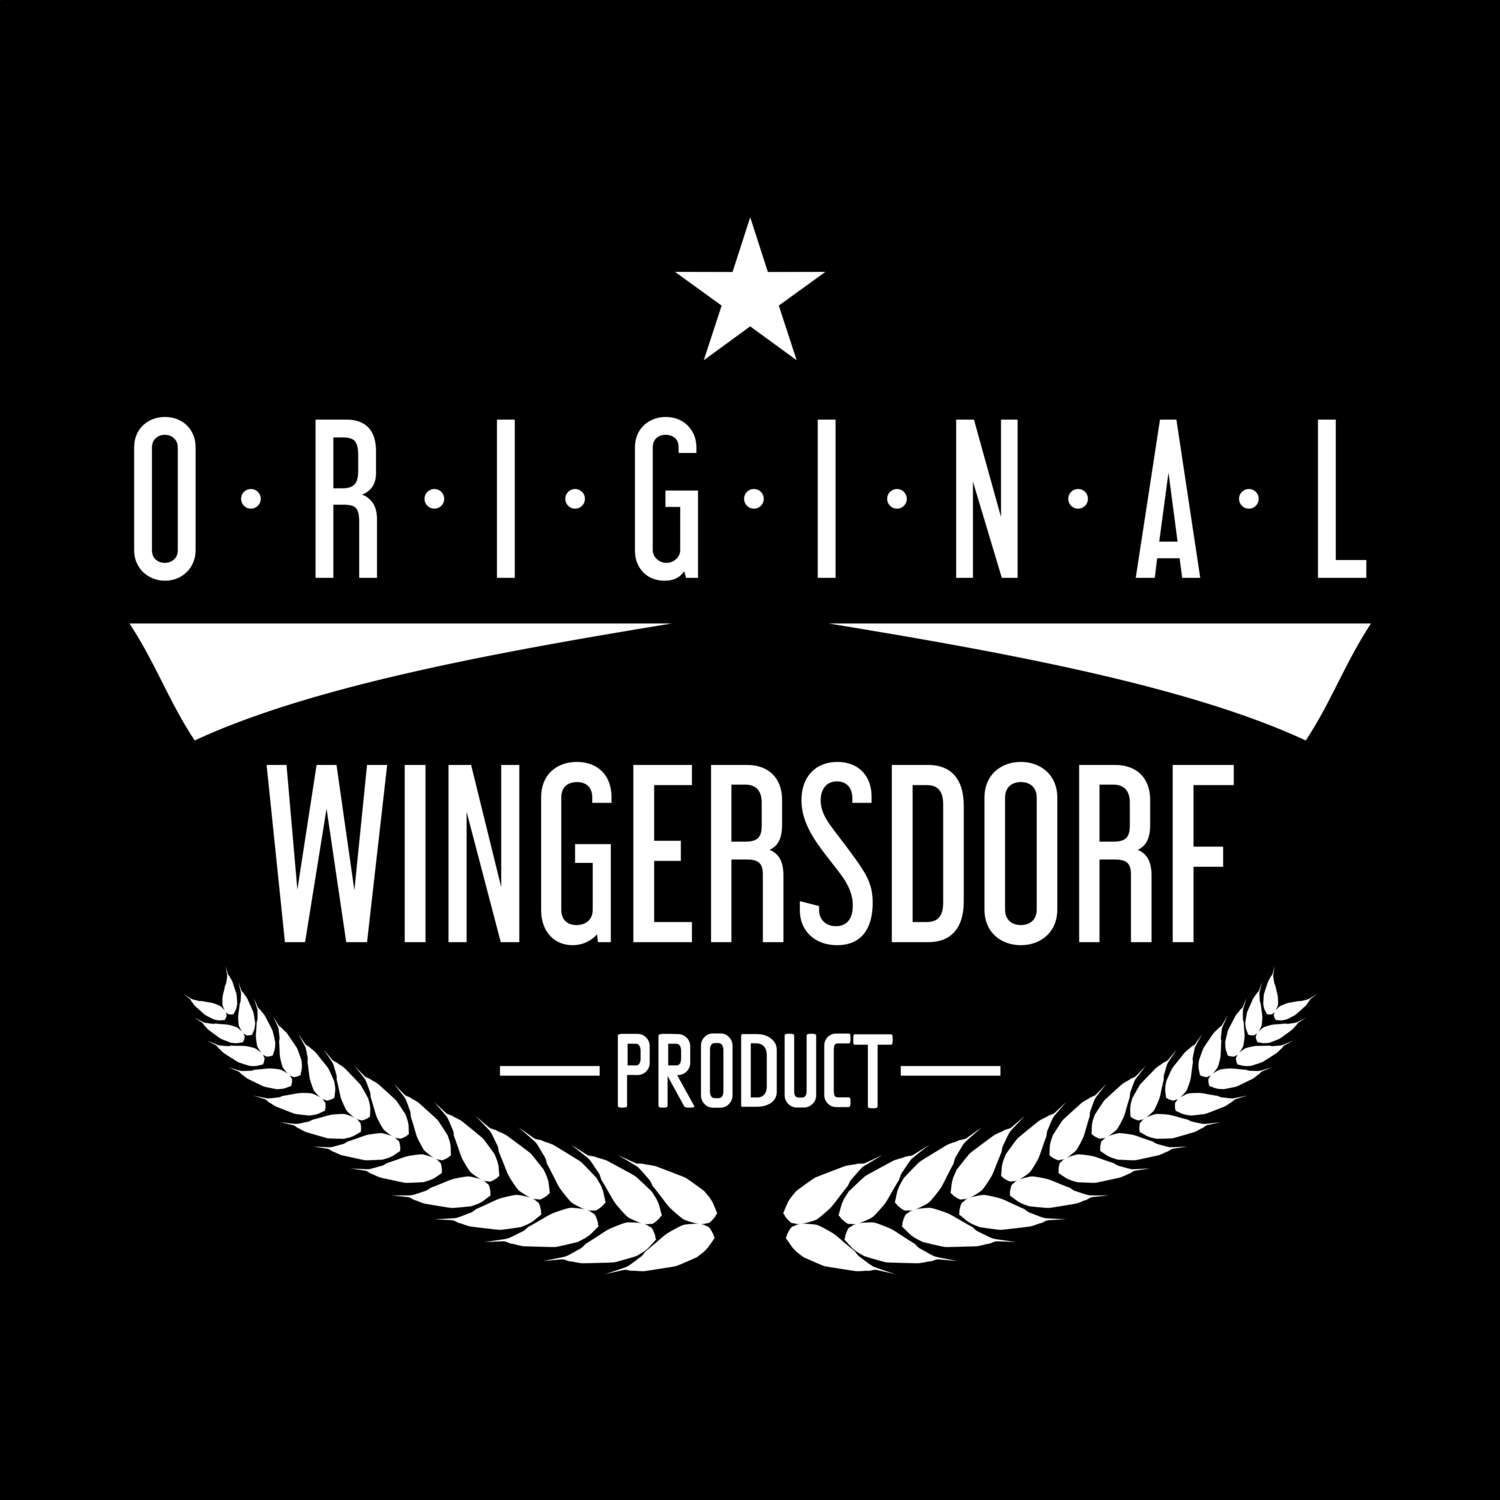 Wingersdorf T-Shirt »Original Product«